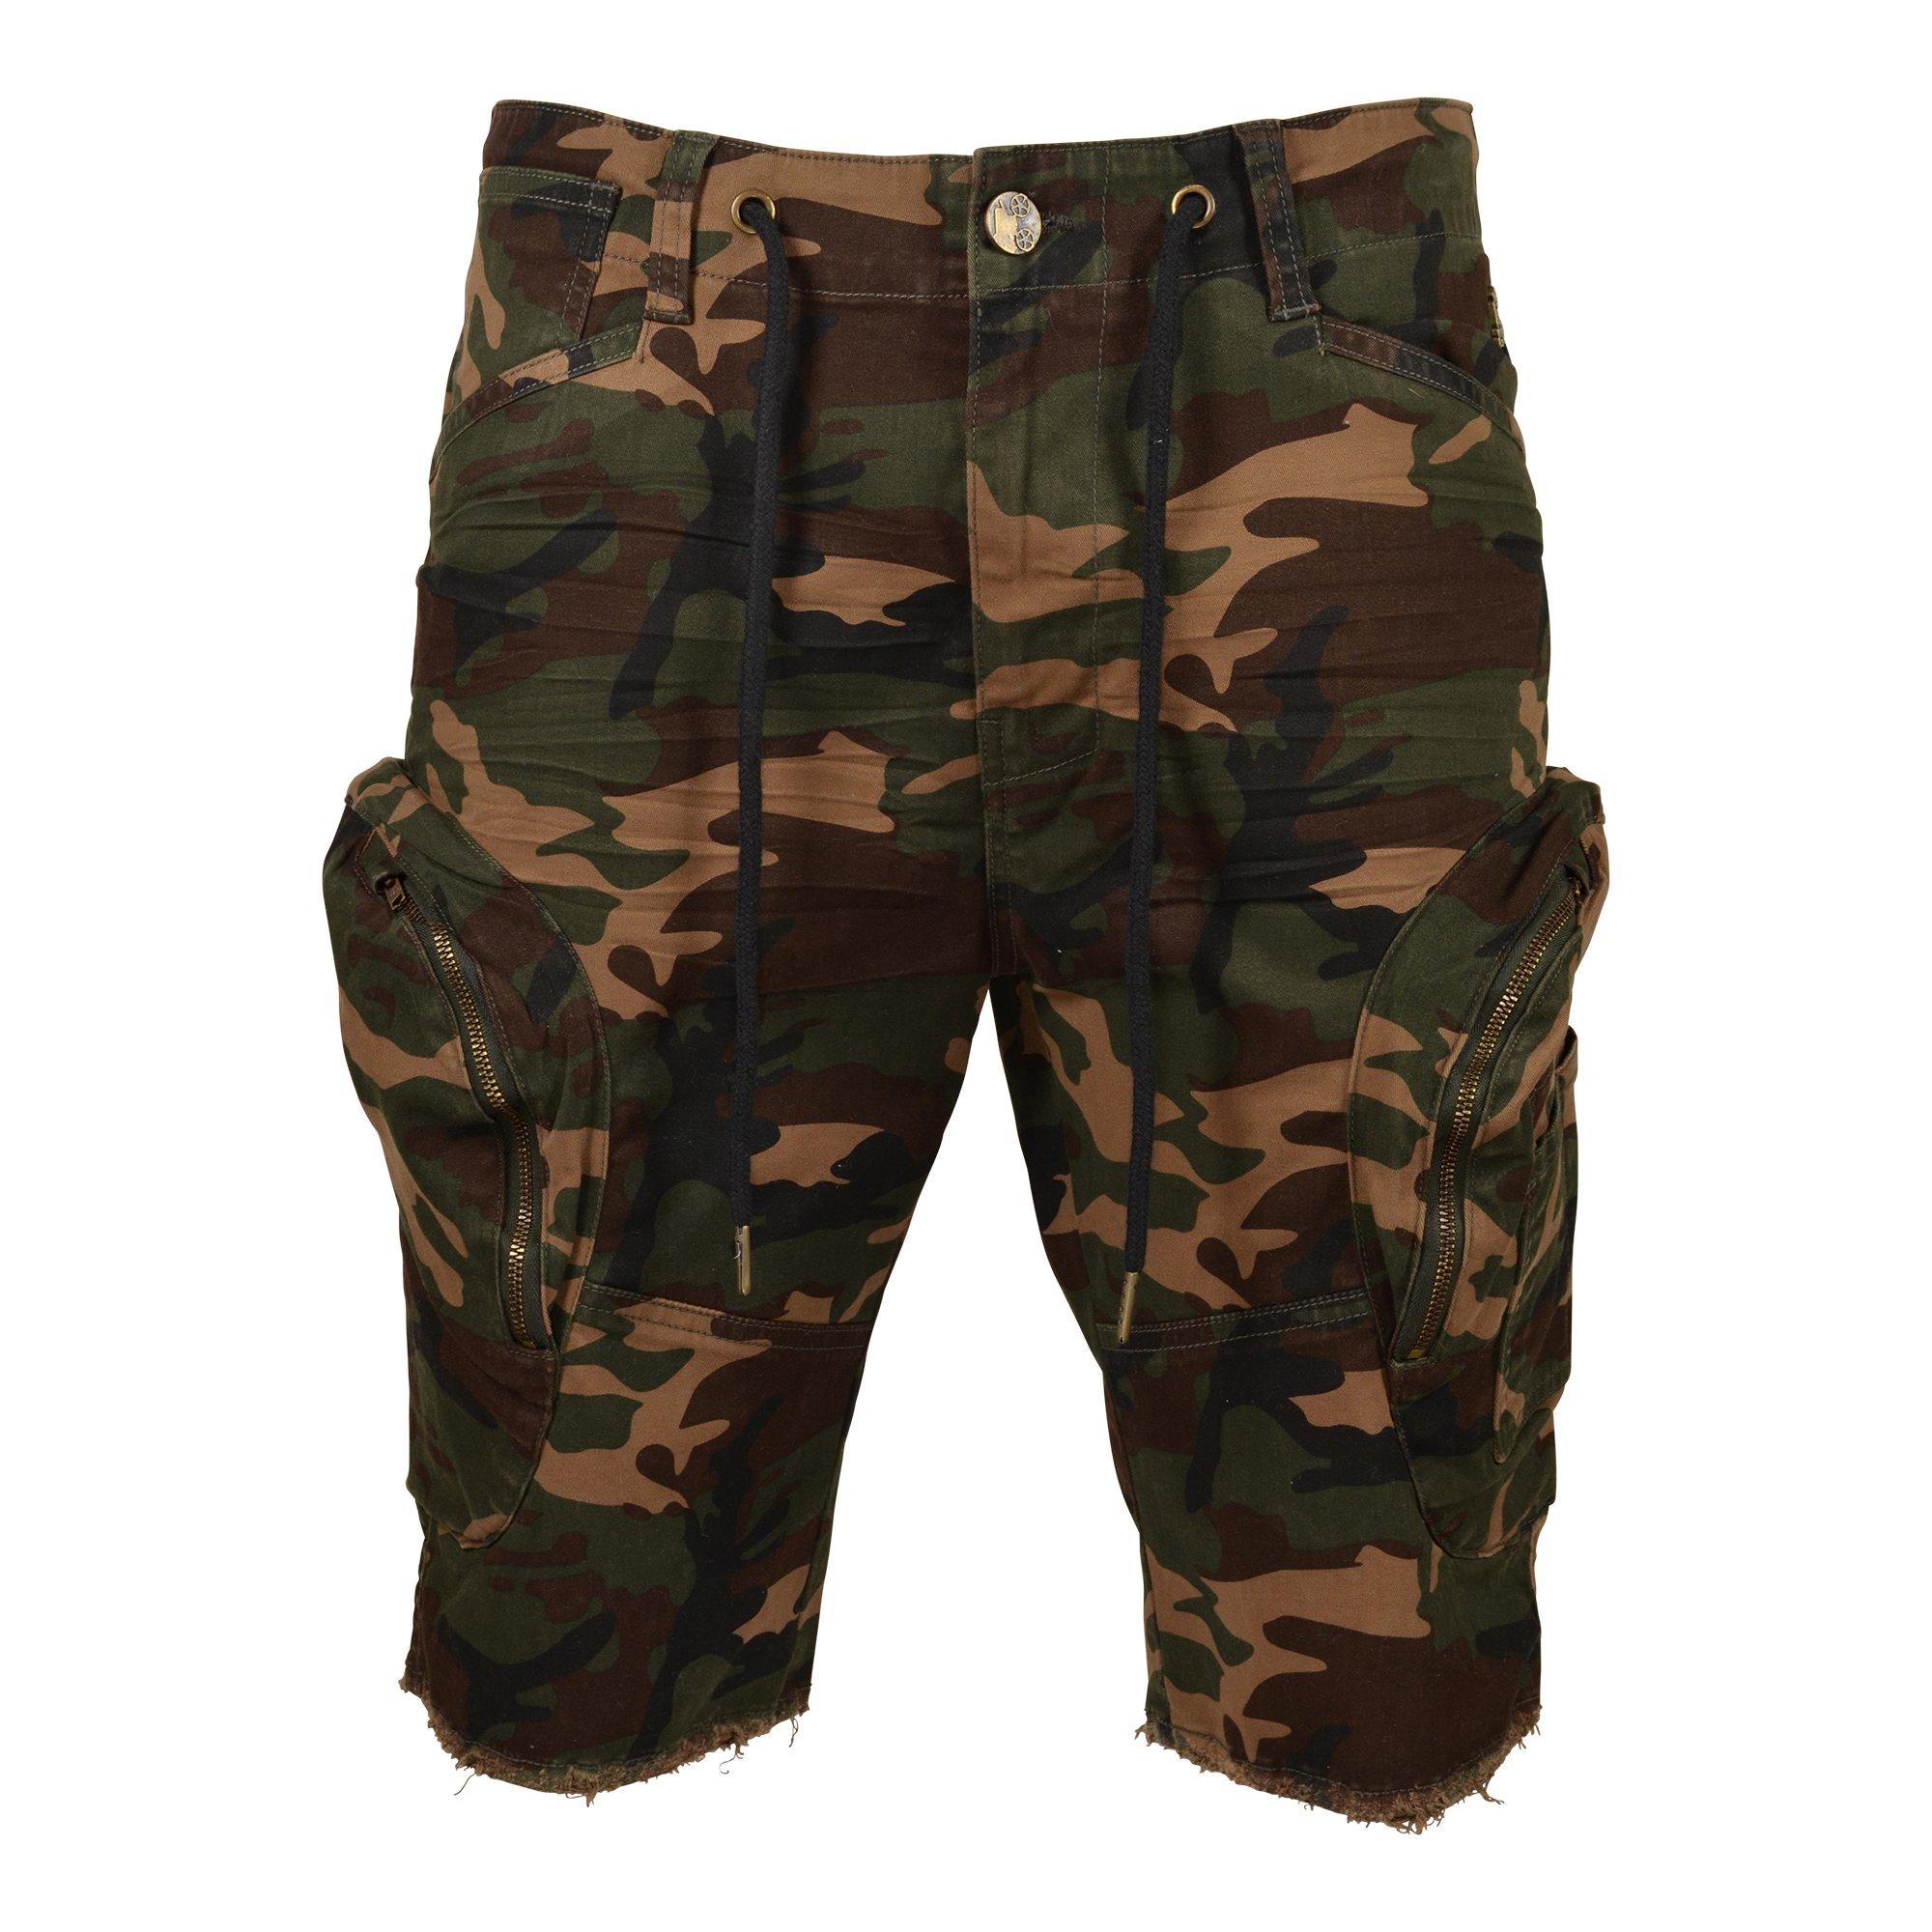 Grindhouse Men's Twill Bellow Pocket Cargo Shorts - Camo/Khaki 